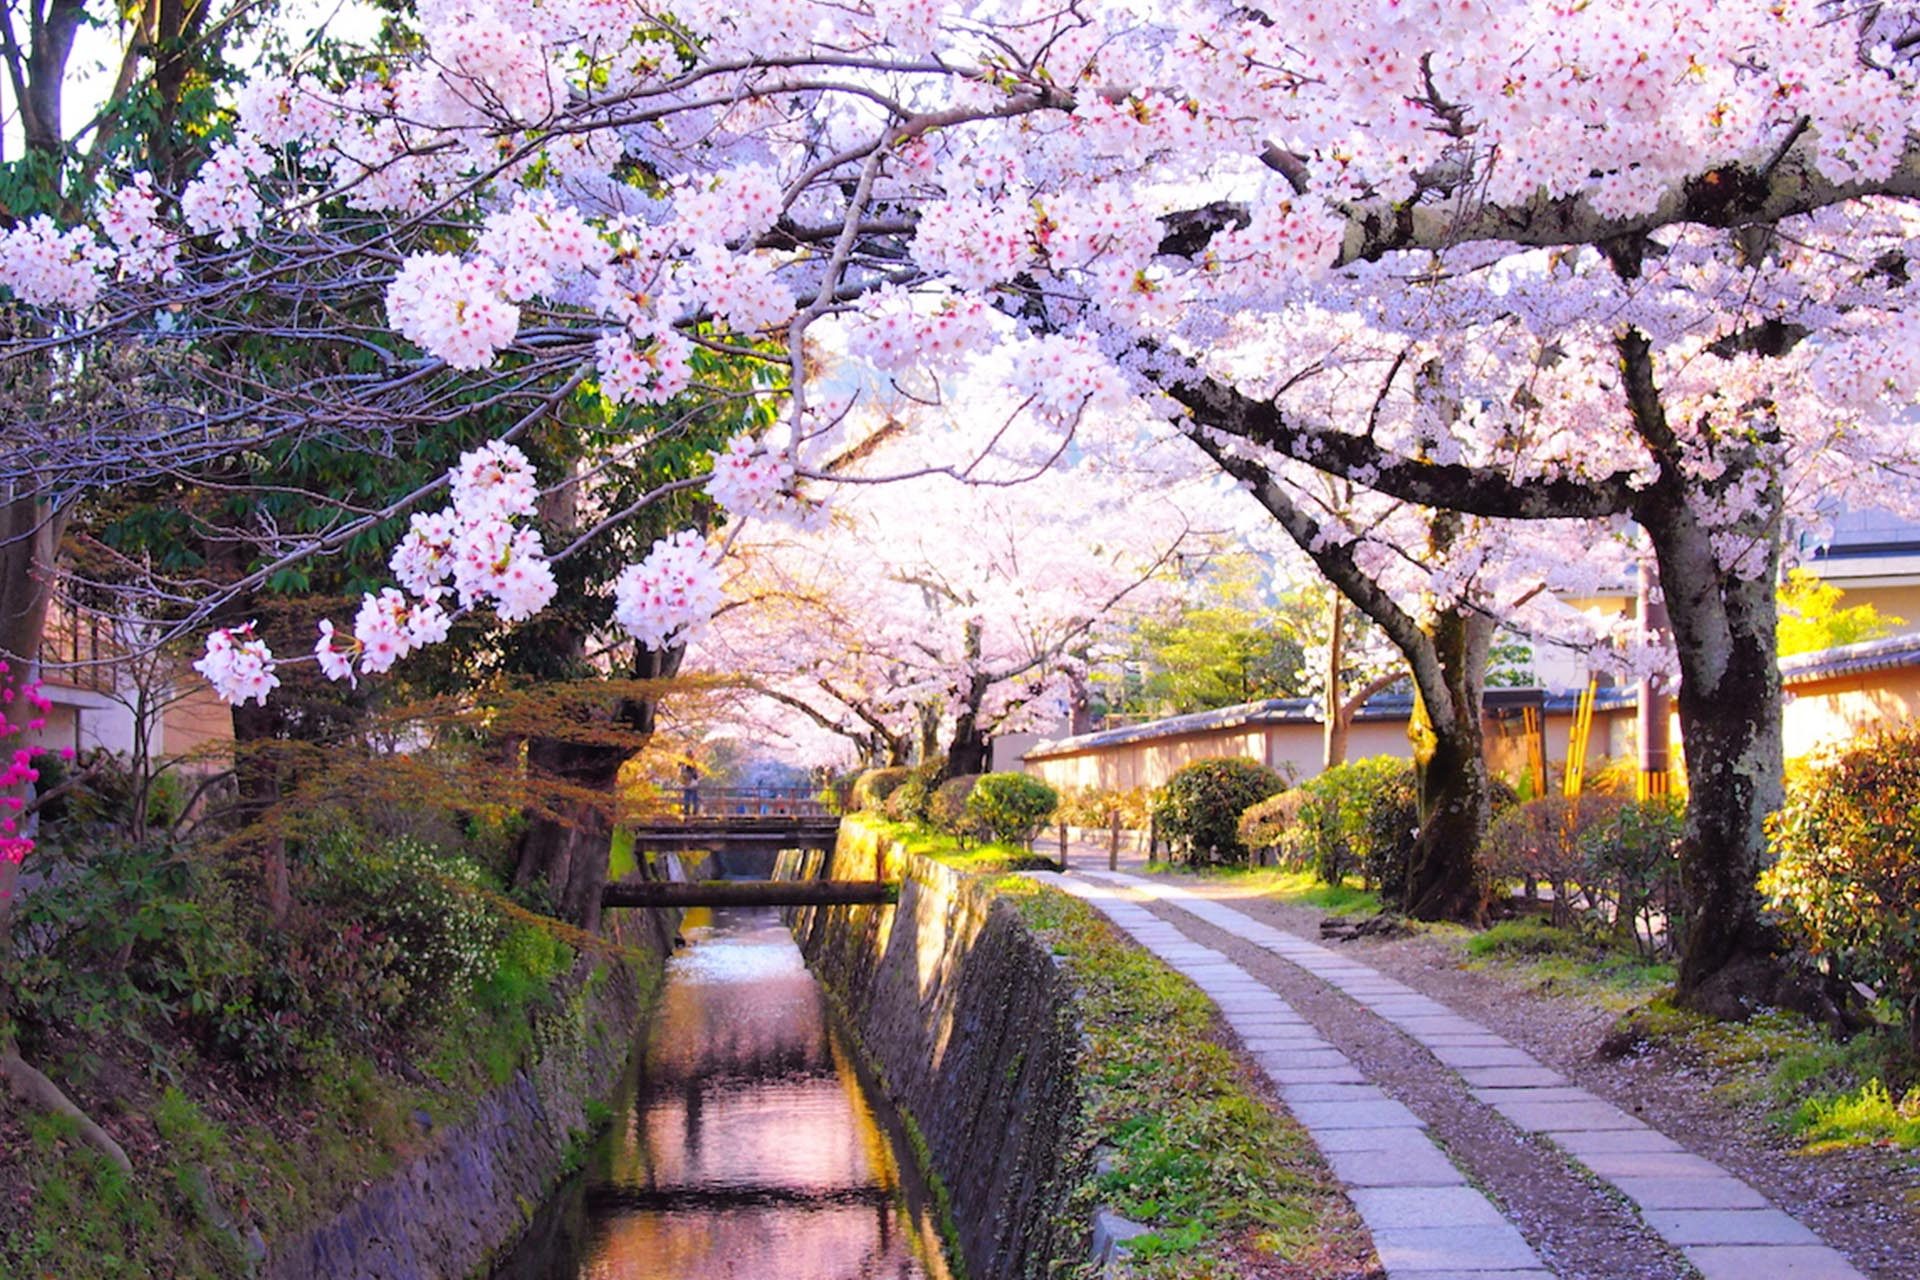 pics_0004_Dia_11_Fig_18_cherry blossom tree tunnel6